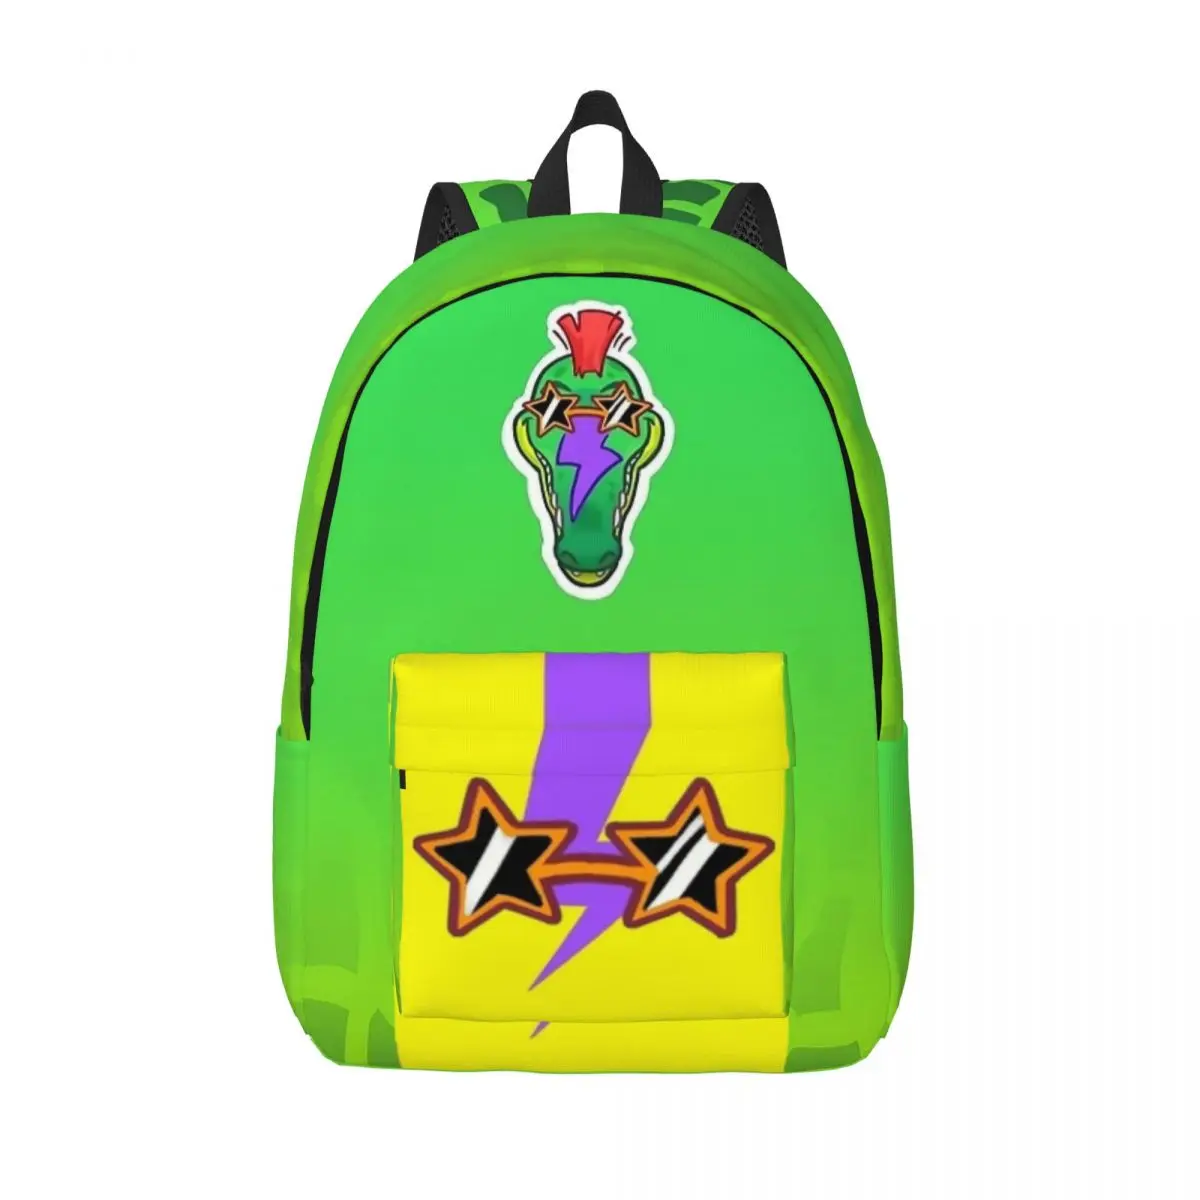 Montgomery Gator Fazbear Entertainment Fnaf Backpack for Boy Girl Kids Student School Bookbag Daypack Preschool Primary - FNAF Plush